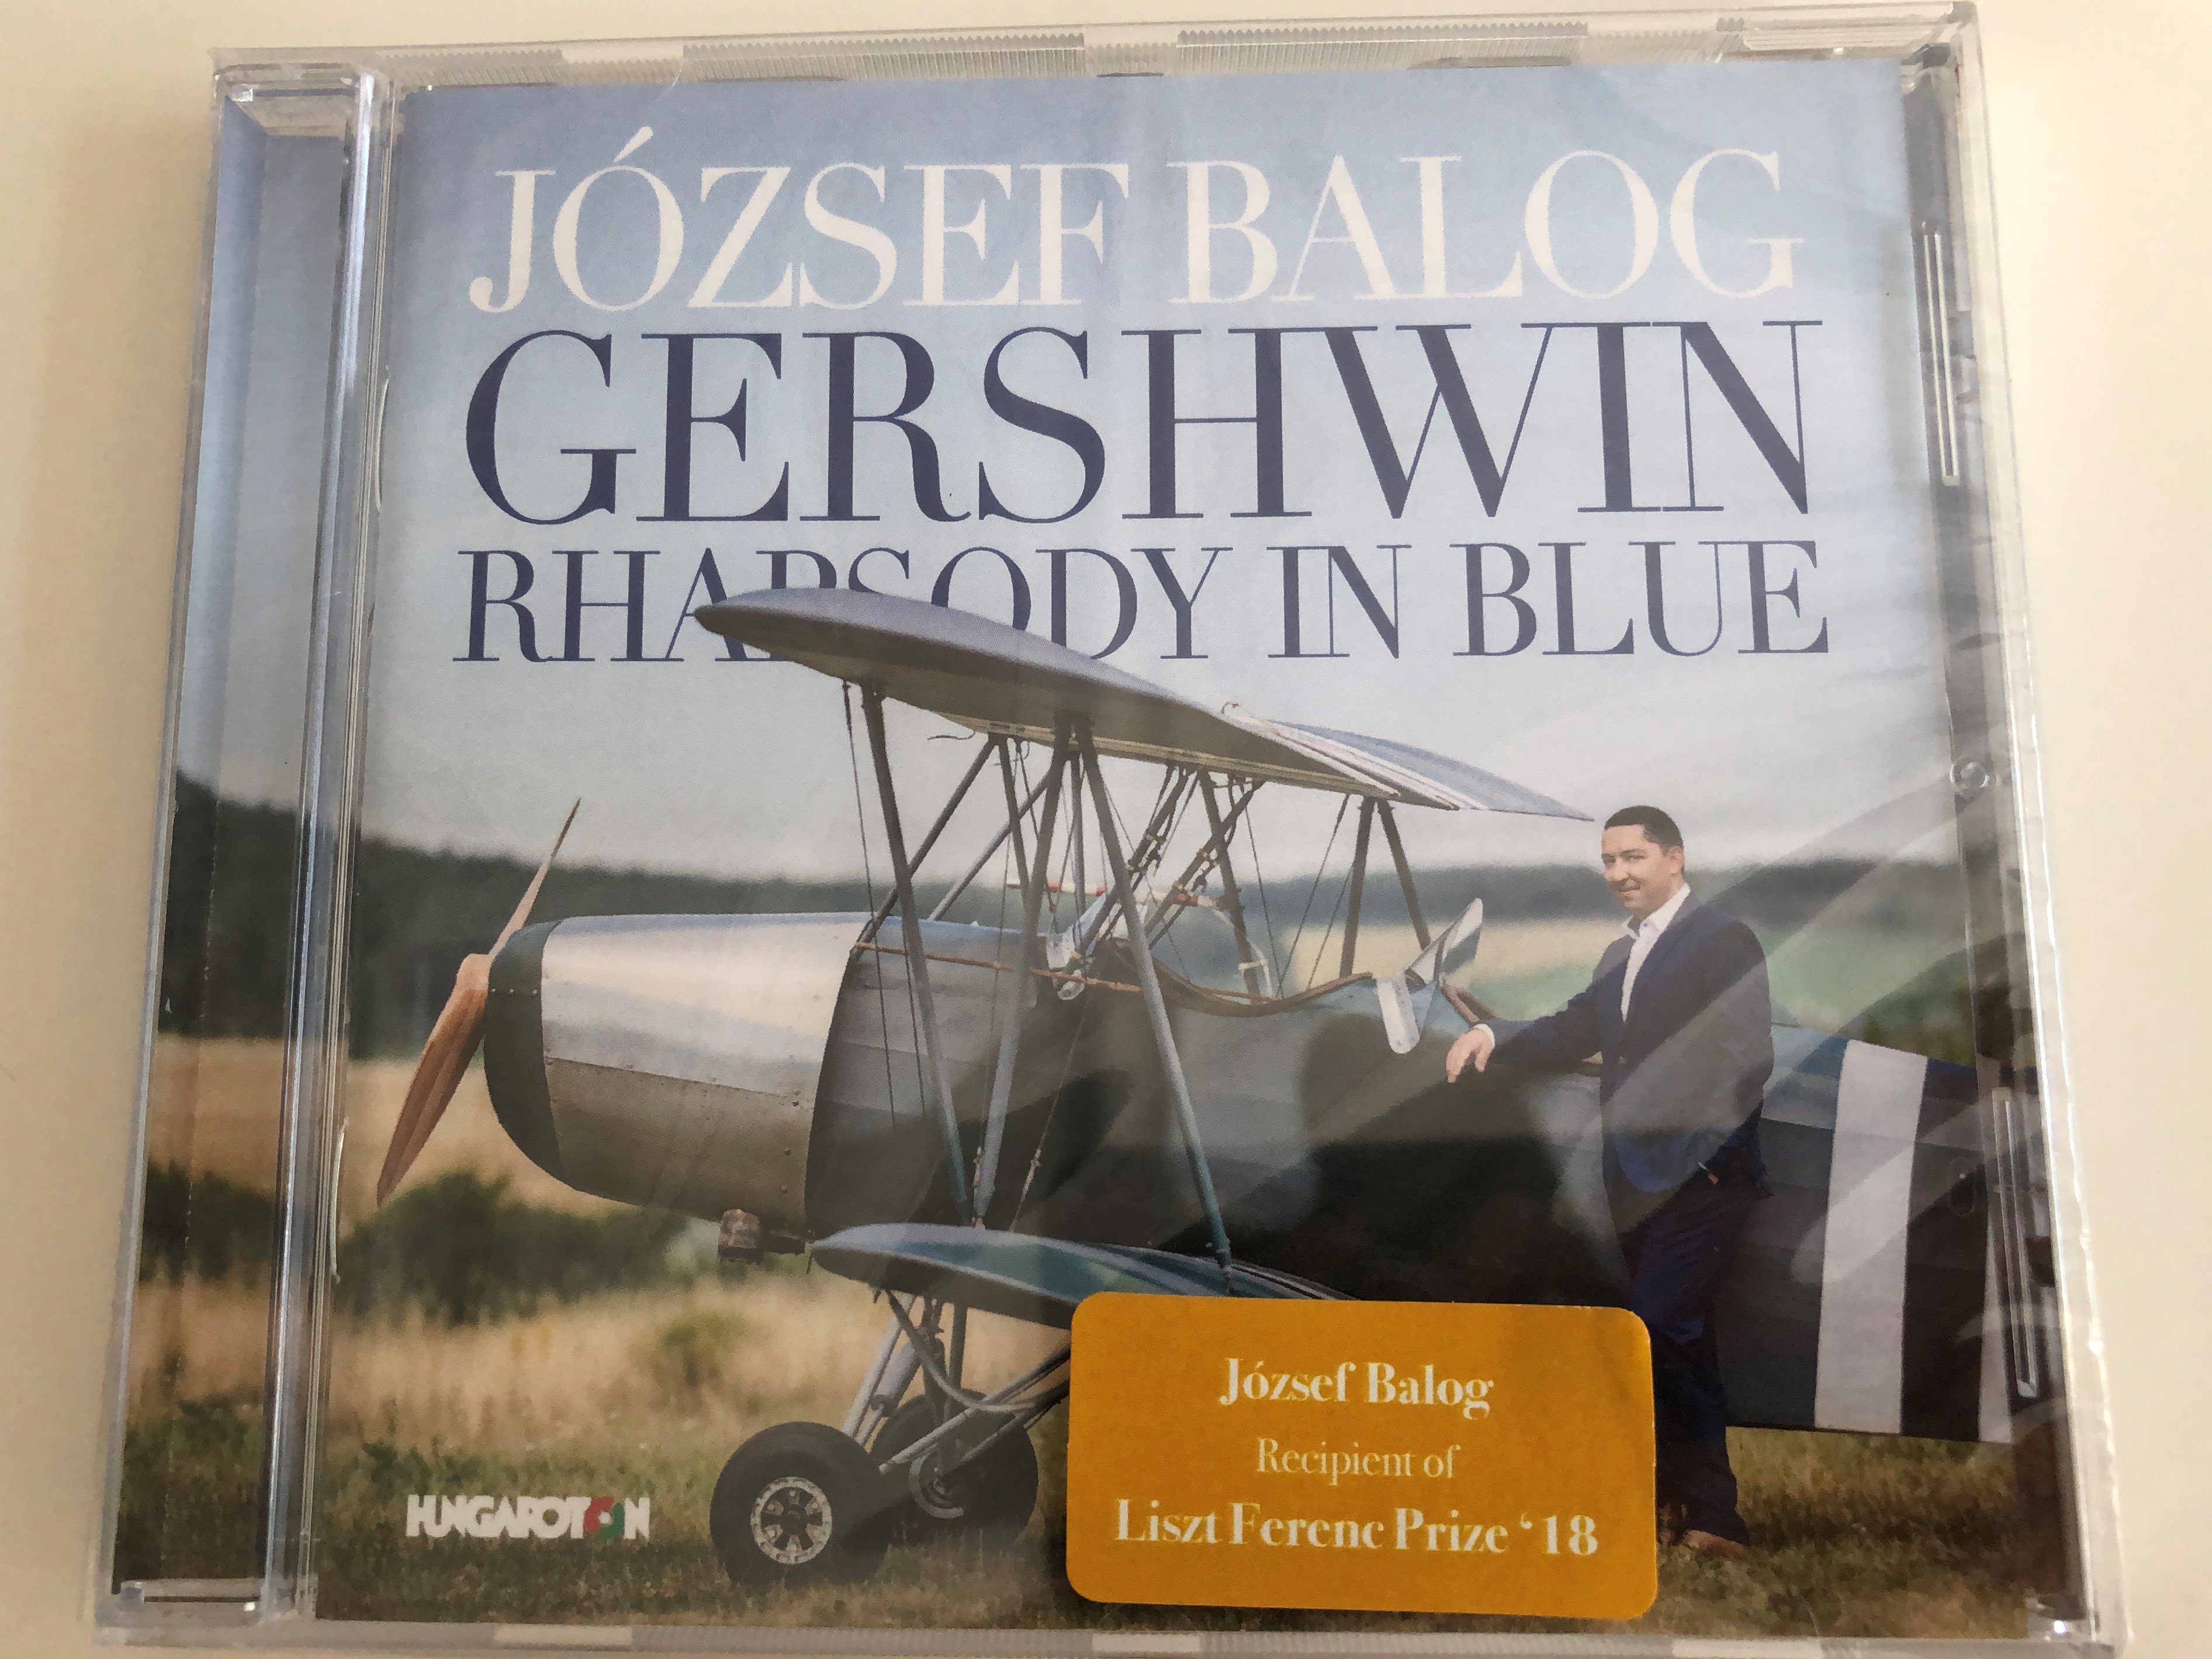 j-zsef-balog-gershwin-rhapsody-in-blue-j-zsef-balof-recipient-of-liszt-ferenc-prize-18-audio-cd-2017-hungaroton-1-.jpg